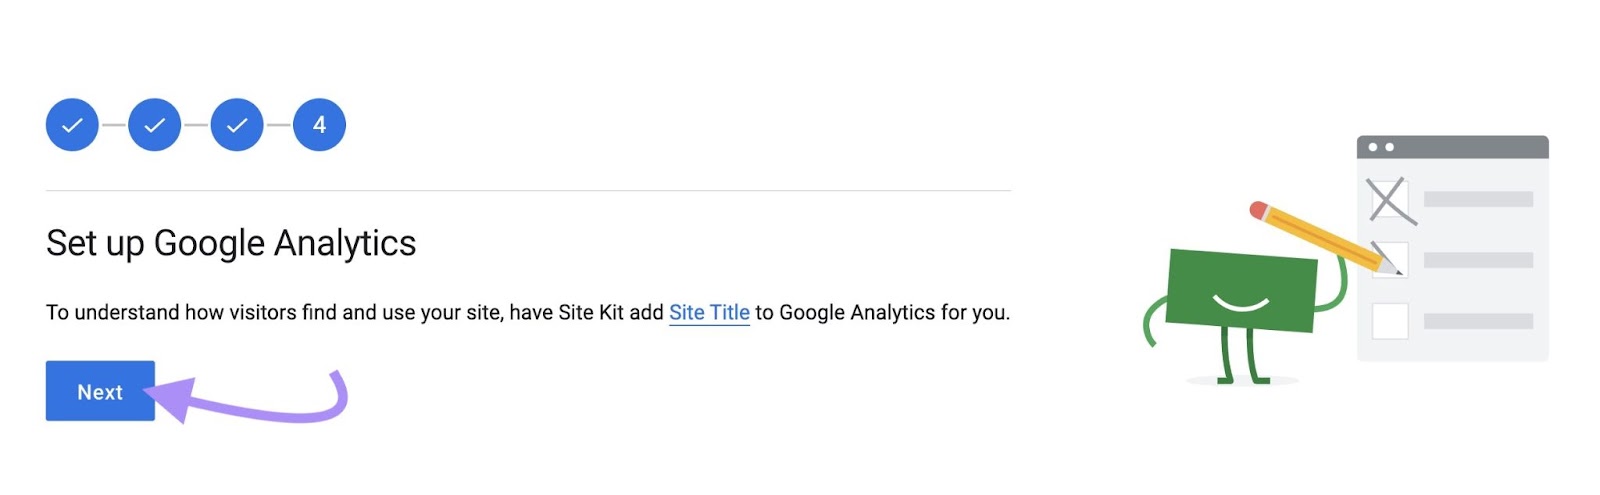 “Set up Google Analytics" screen